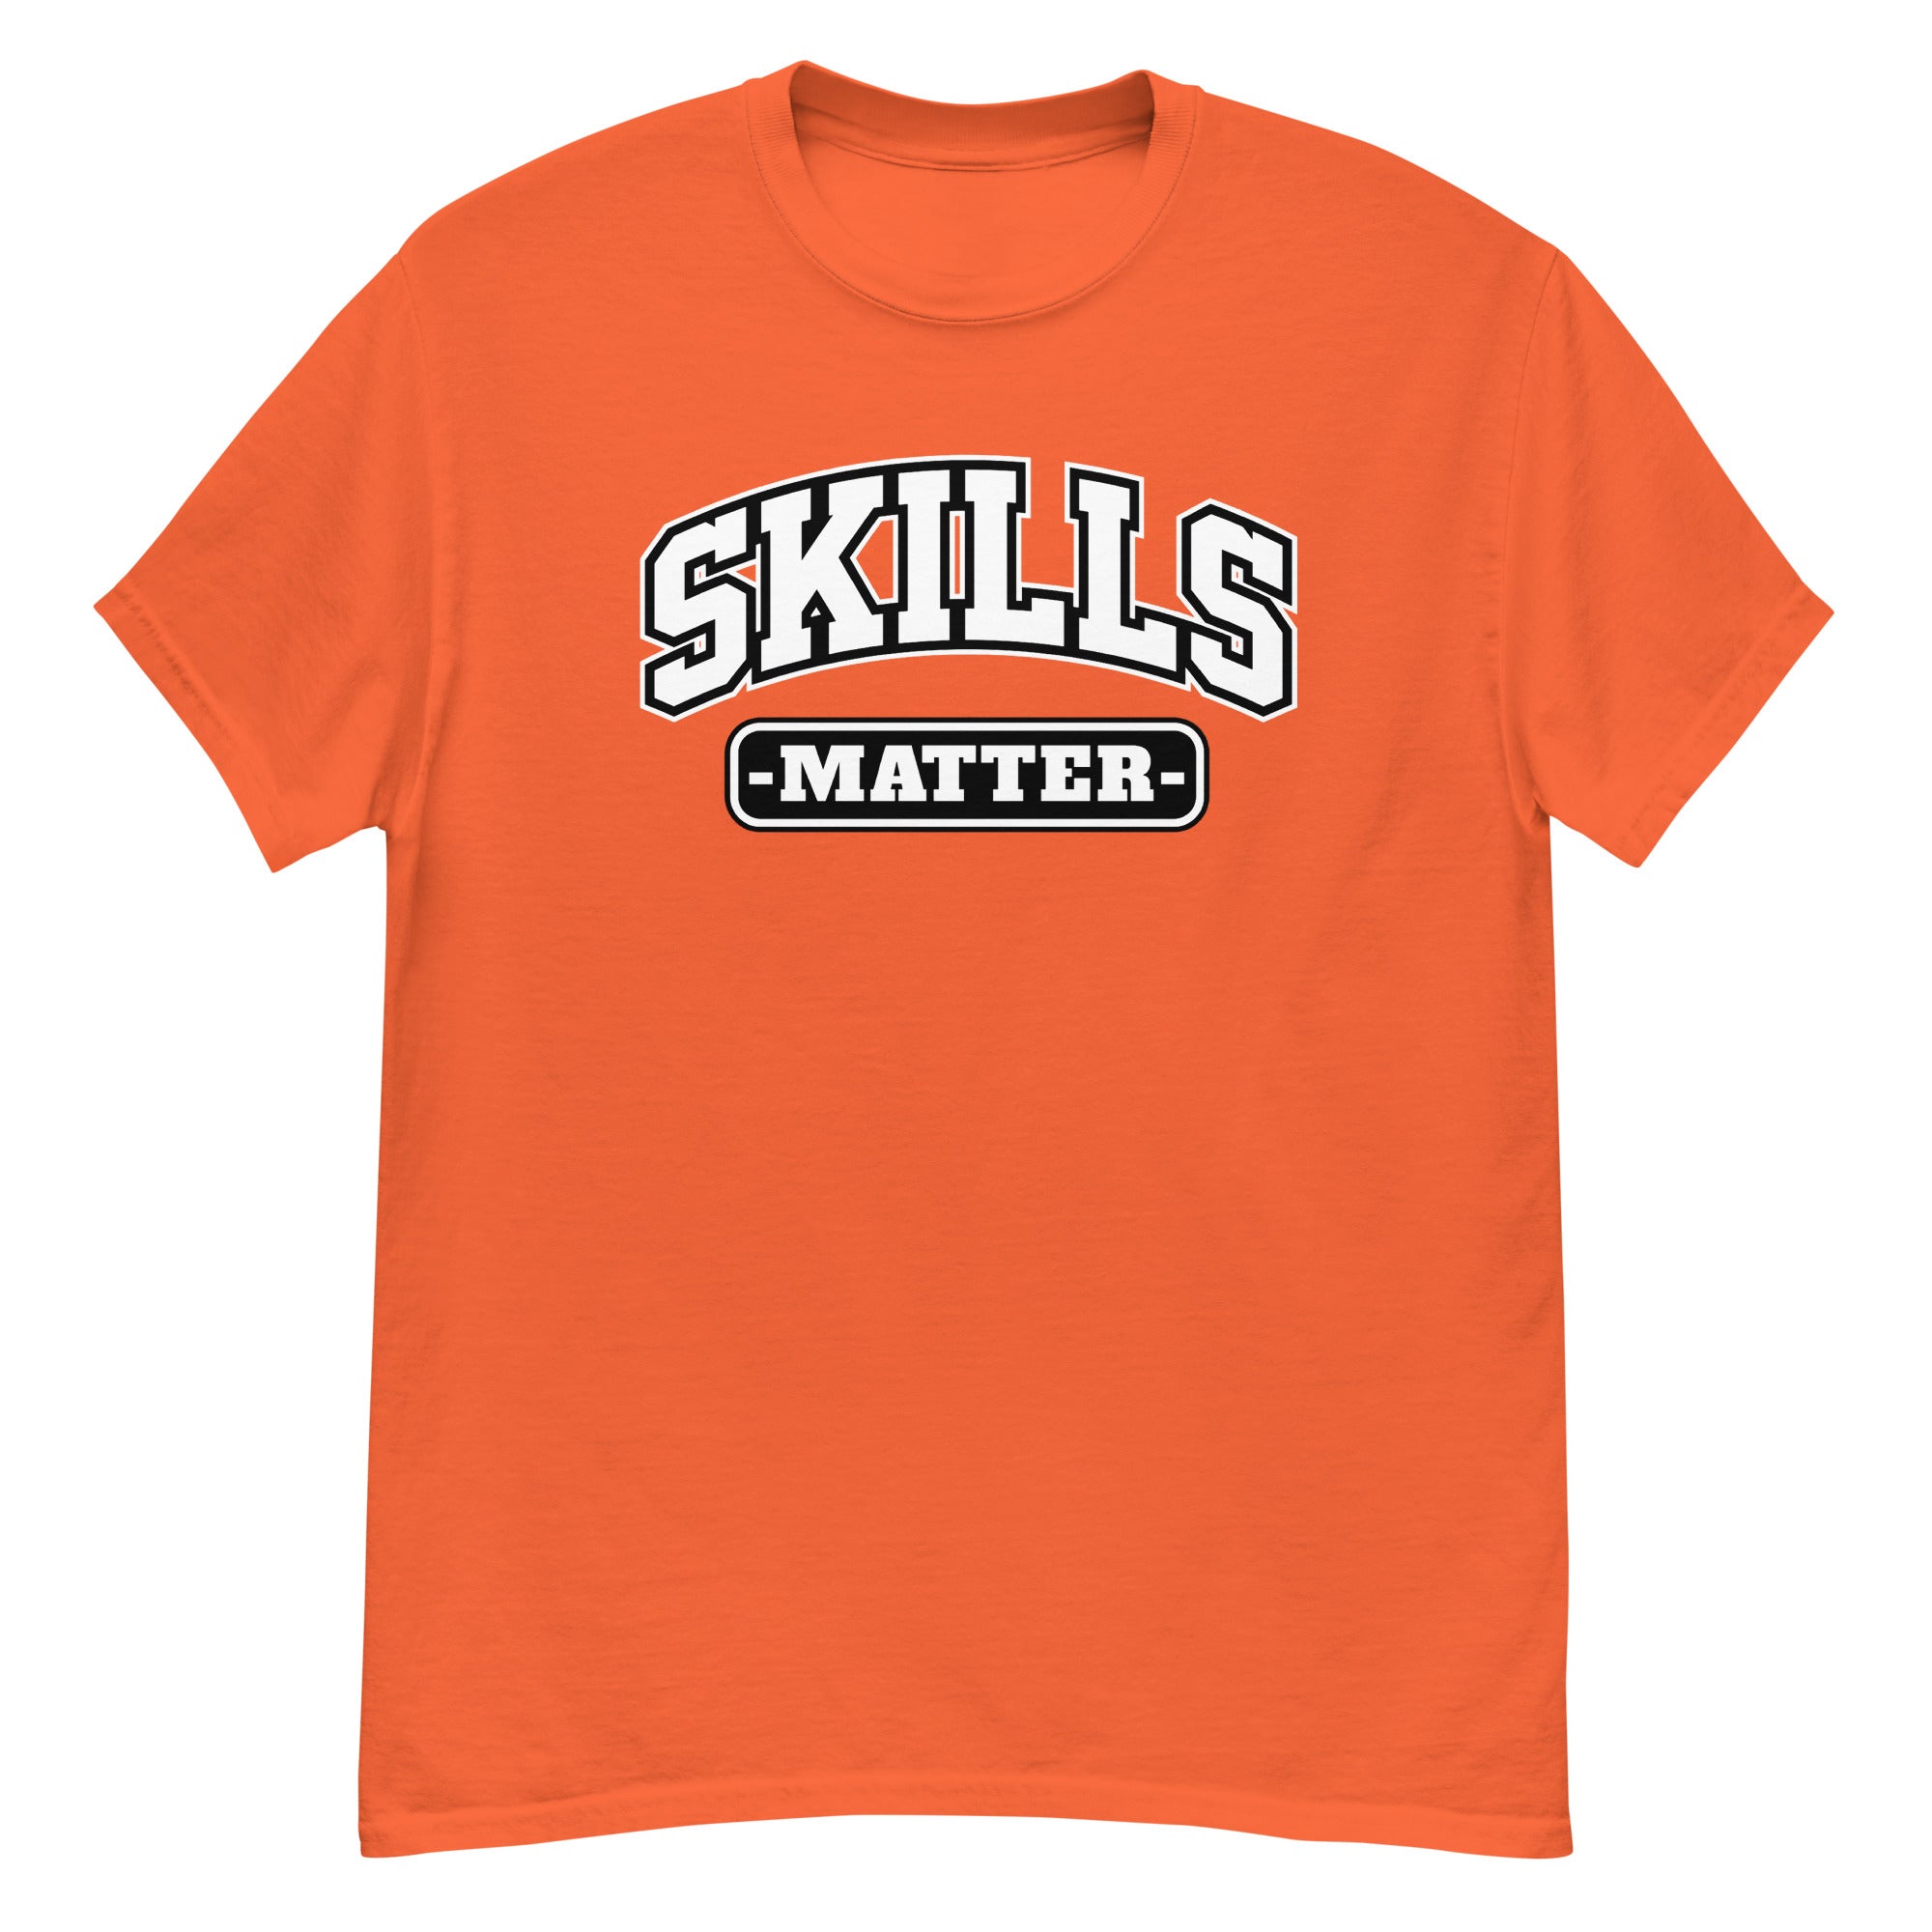 SKILLS MATTER - Men's T-shirt